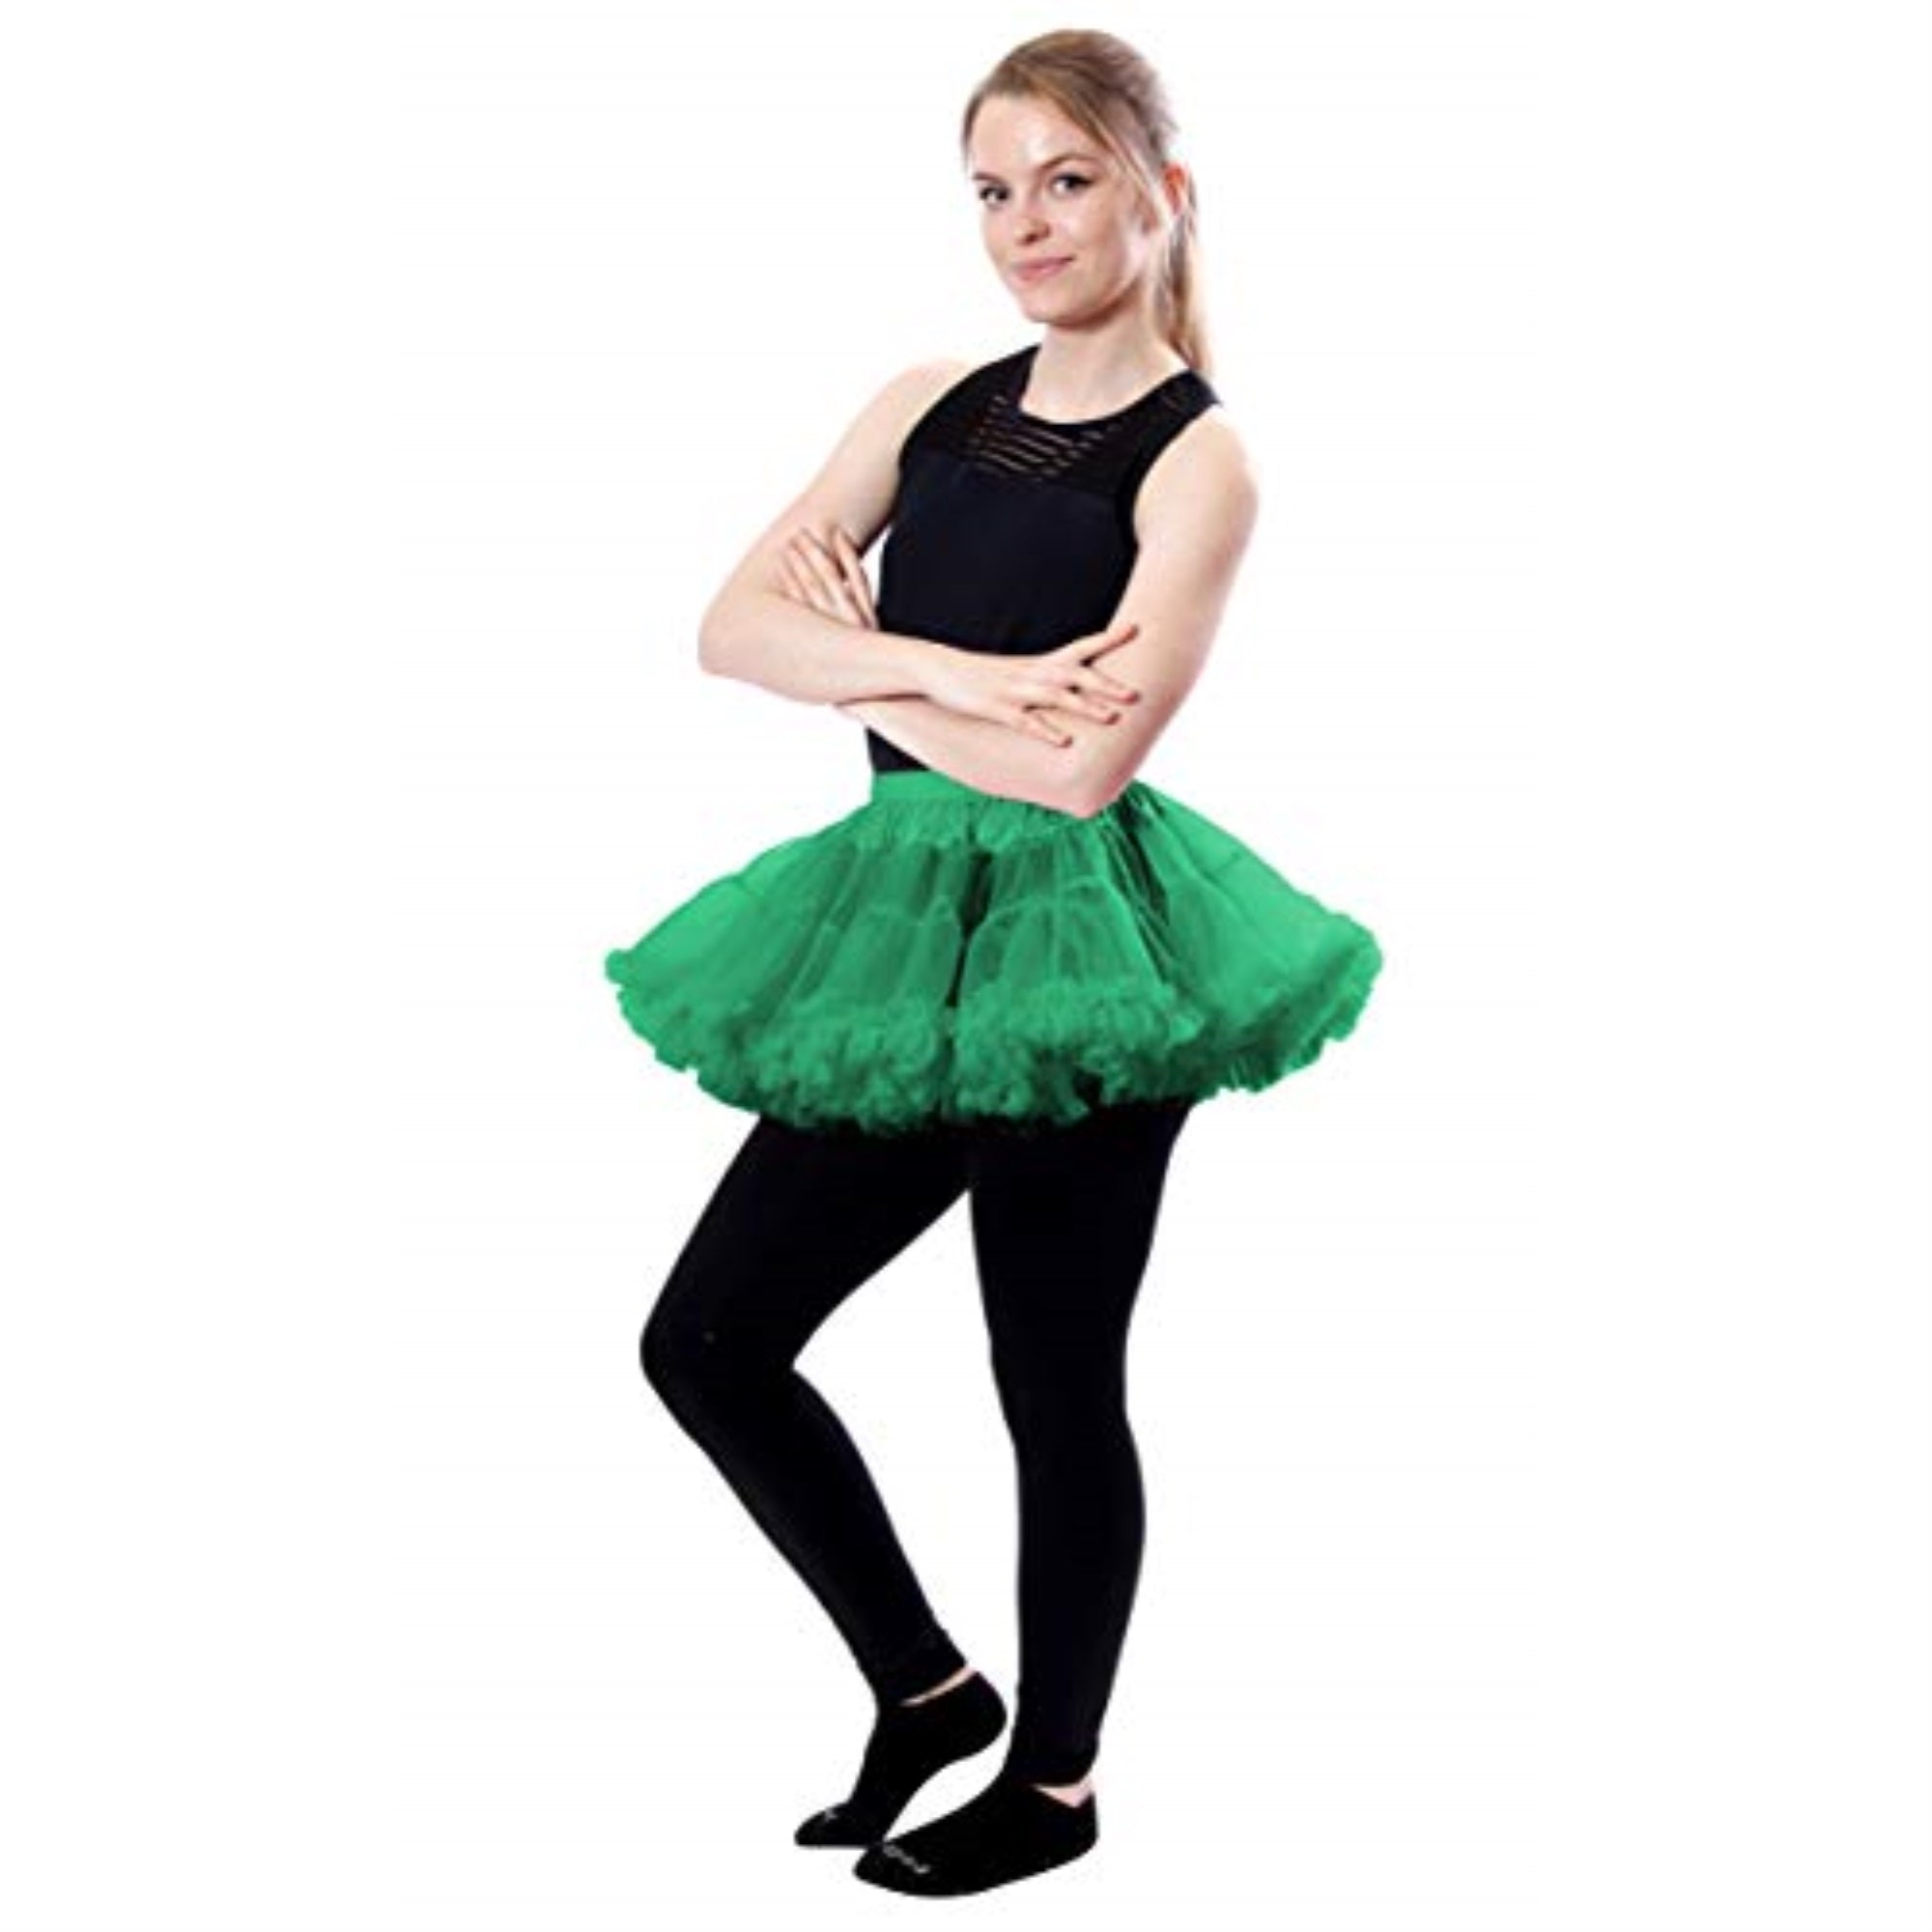 Luxury Child Very Short Cute Tutu Skirt for Halloween - Kelly Green